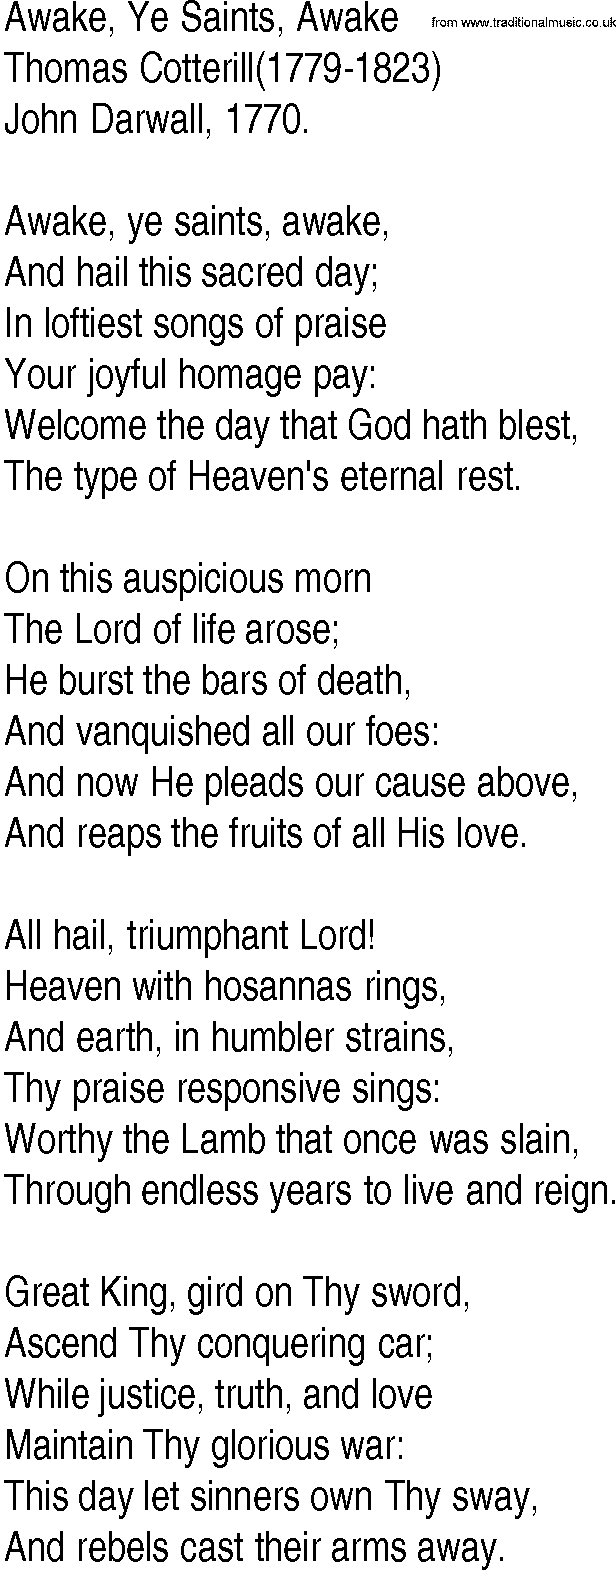 Hymn and Gospel Song: Awake, Ye Saints, Awake by Thomas Cotterill lyrics